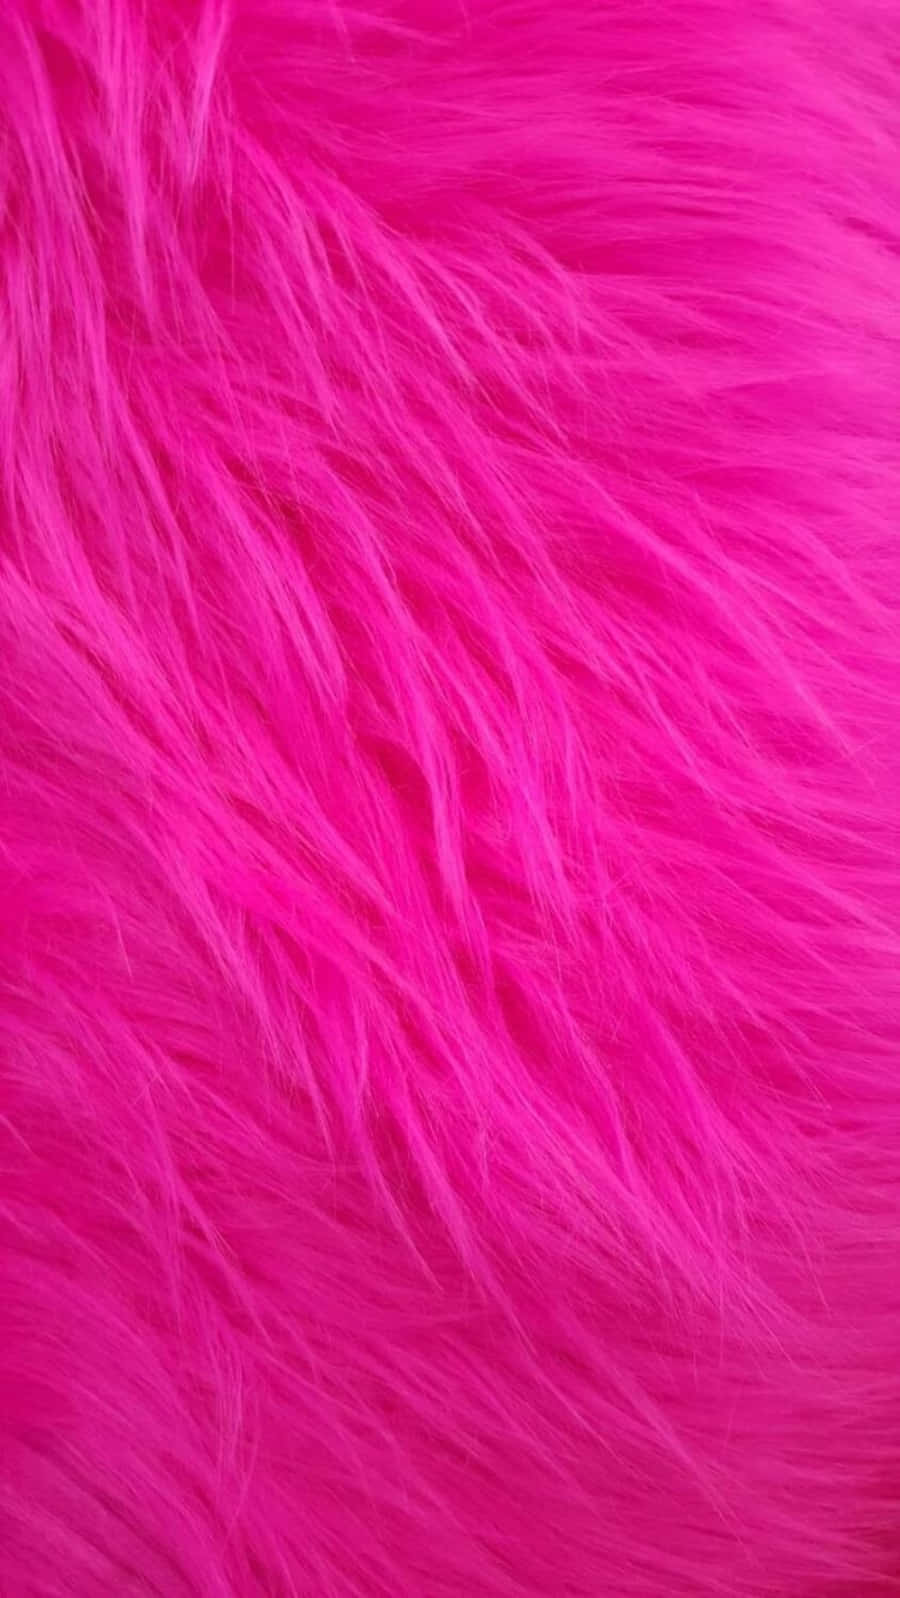 Aesthetic Dark Pink Feather Wallpaper